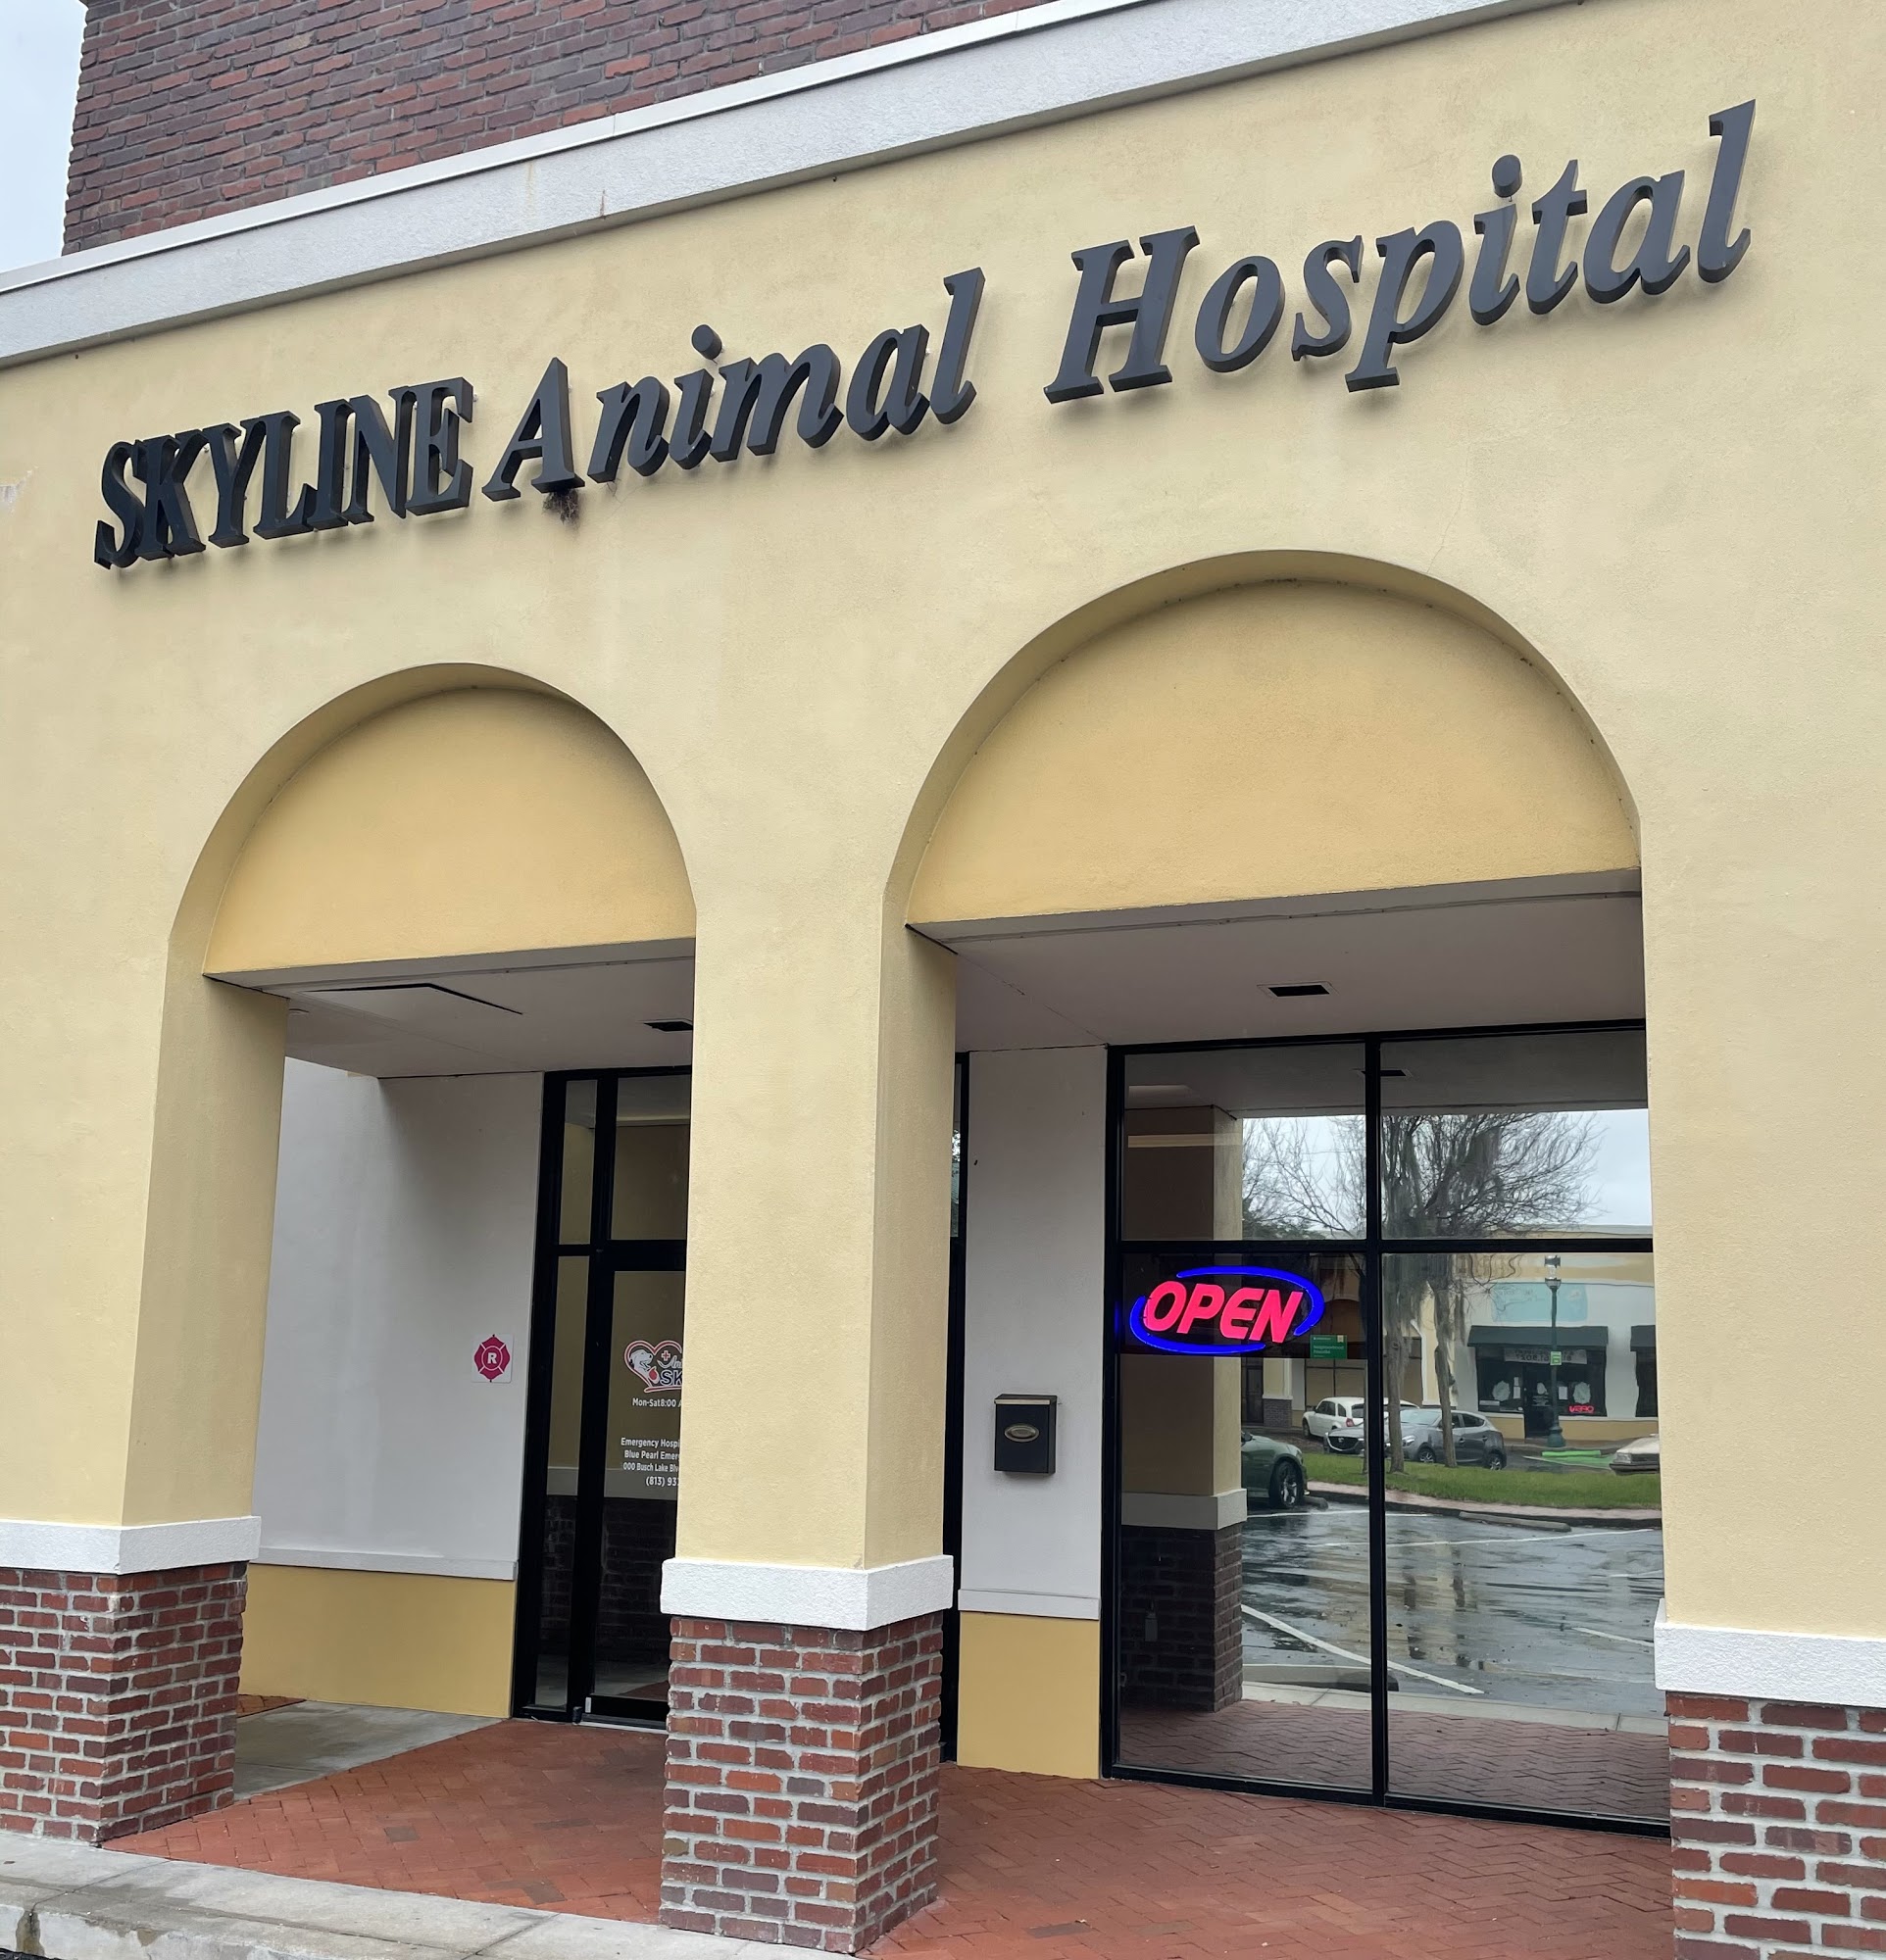 SKYLINE Animal Hospital